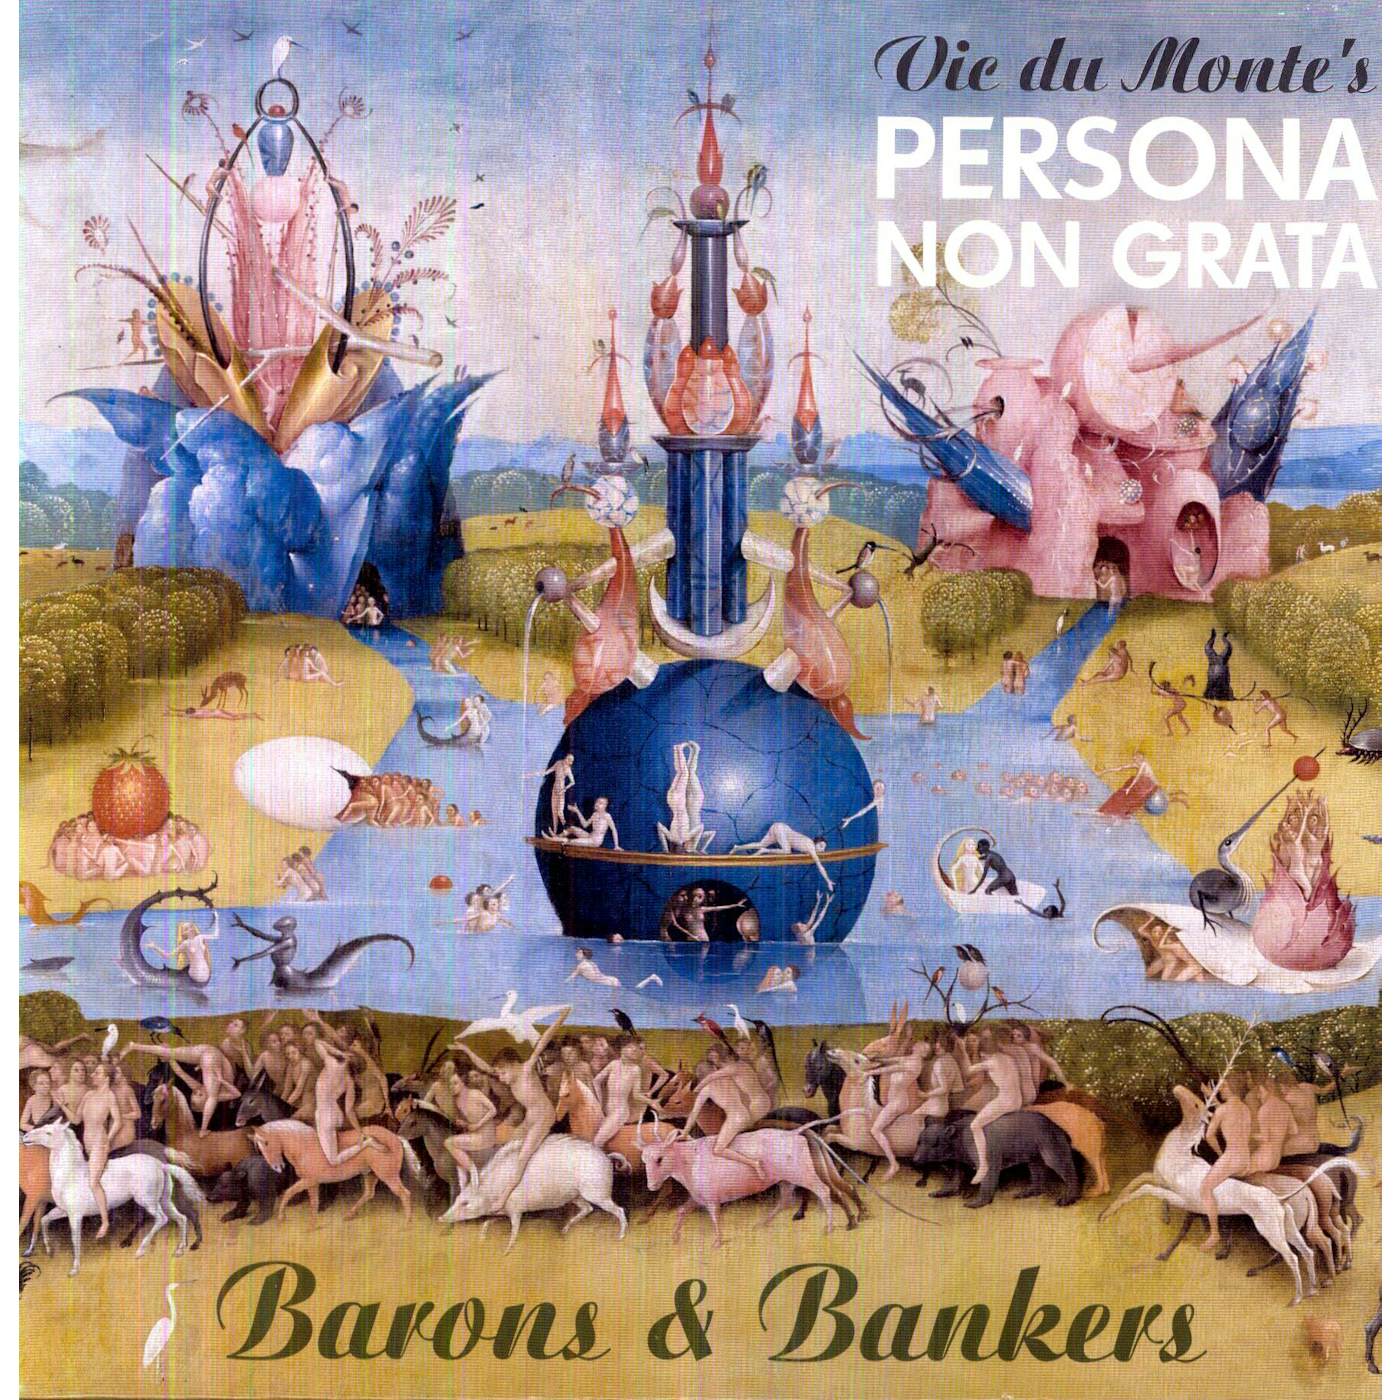 Vic Du Monte's Barons & Bankers Vinyl Record